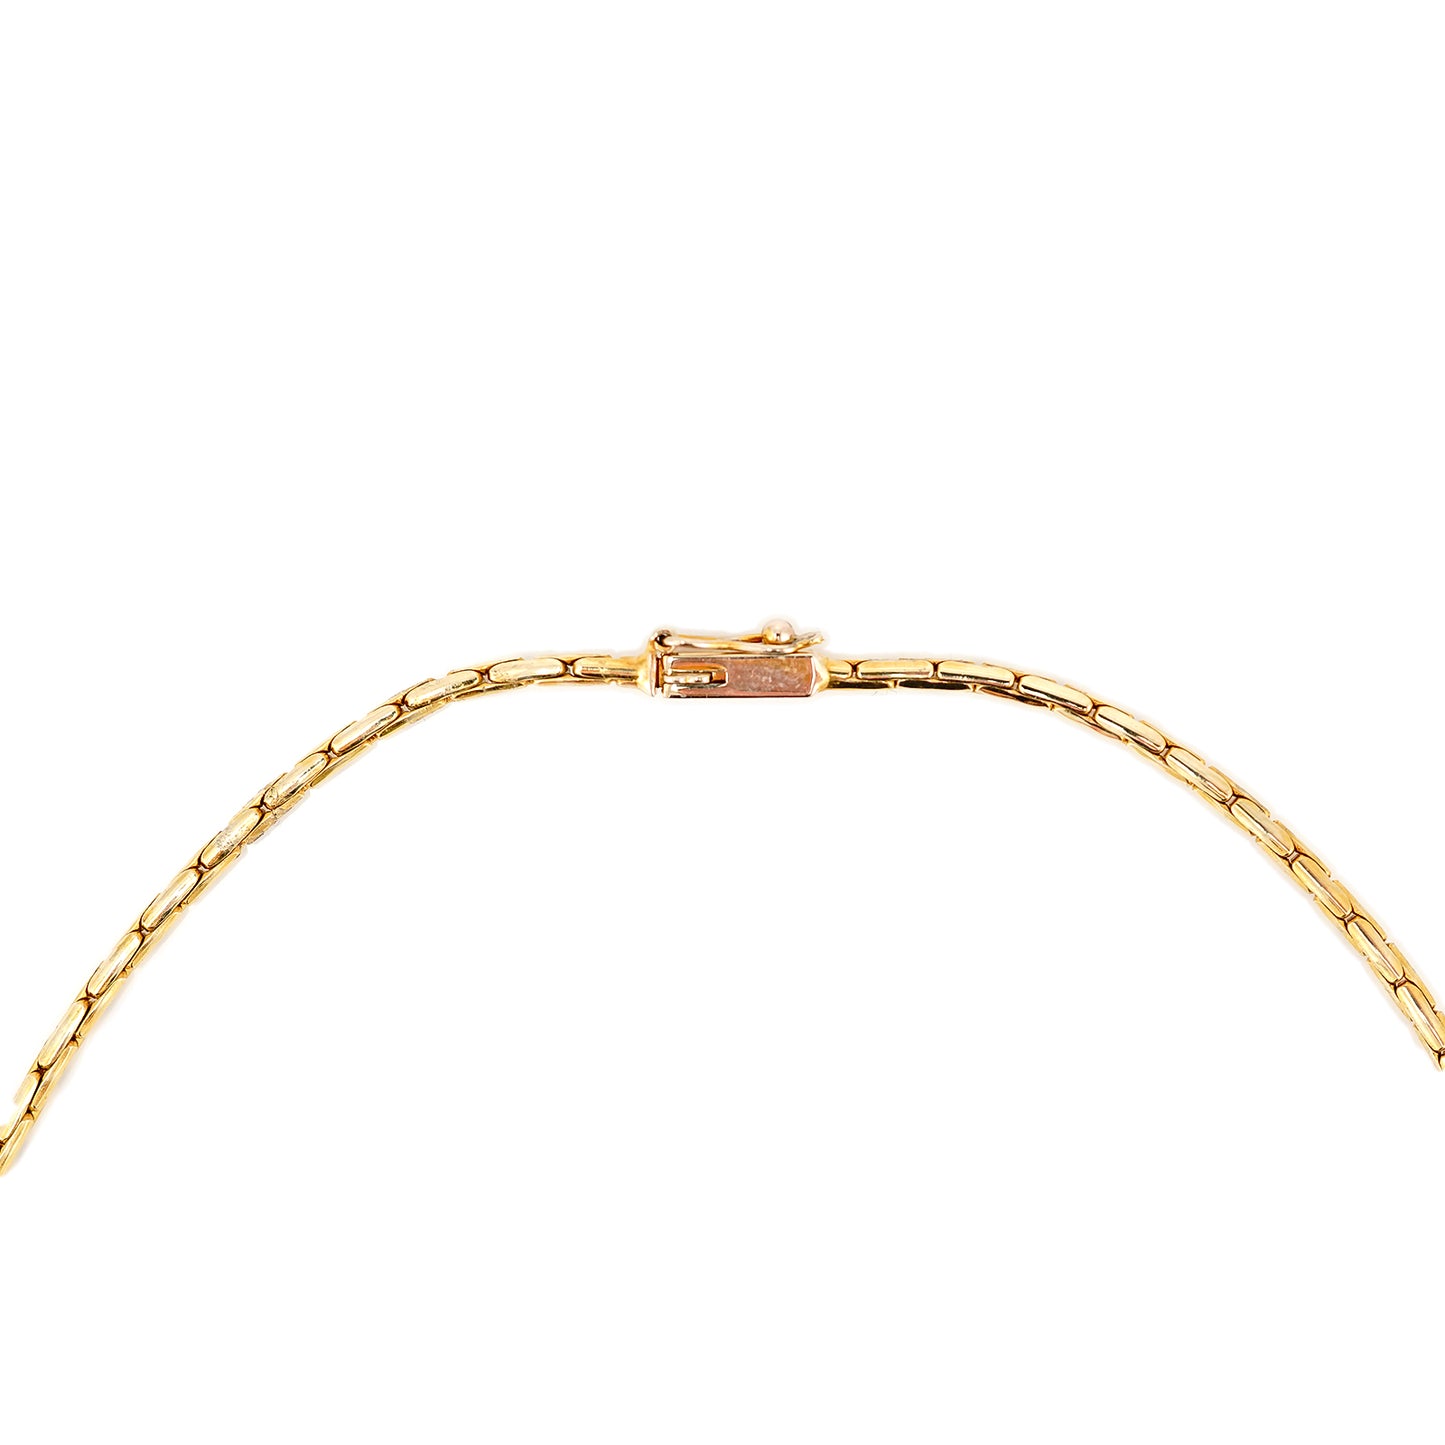 Necklace women's chain vintage design necklace gold 14K585 with pearls diamonds 42cm